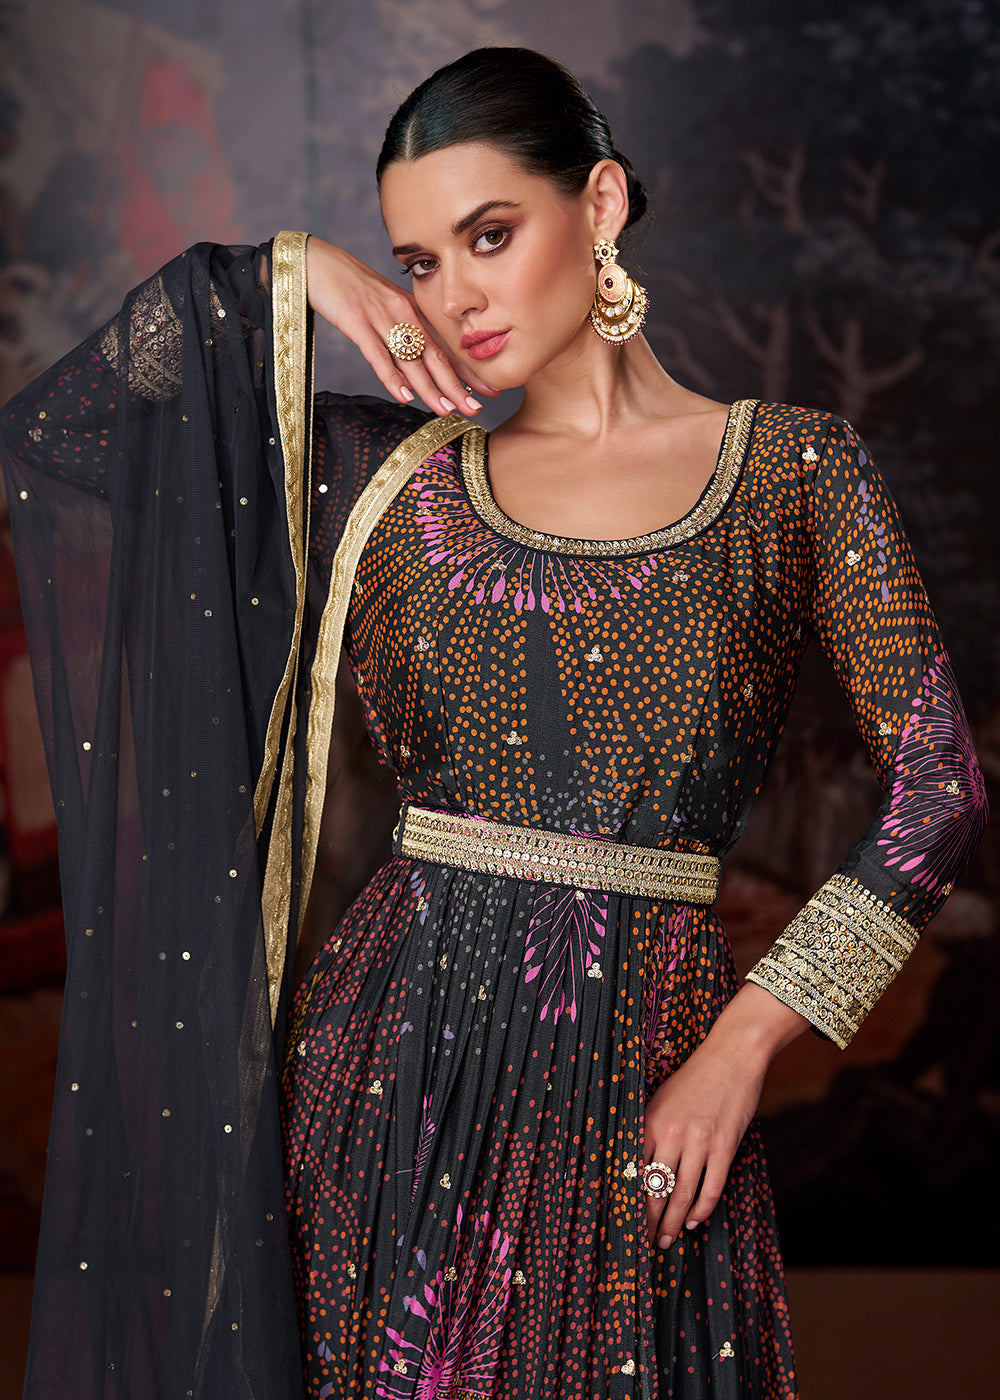 Buy Now Blue Black Printed & Embroidered Wedding Anarkali Dress Online in USA, UK, Australia, New Zealand, Canada & Worldwide at Empress Clothing.